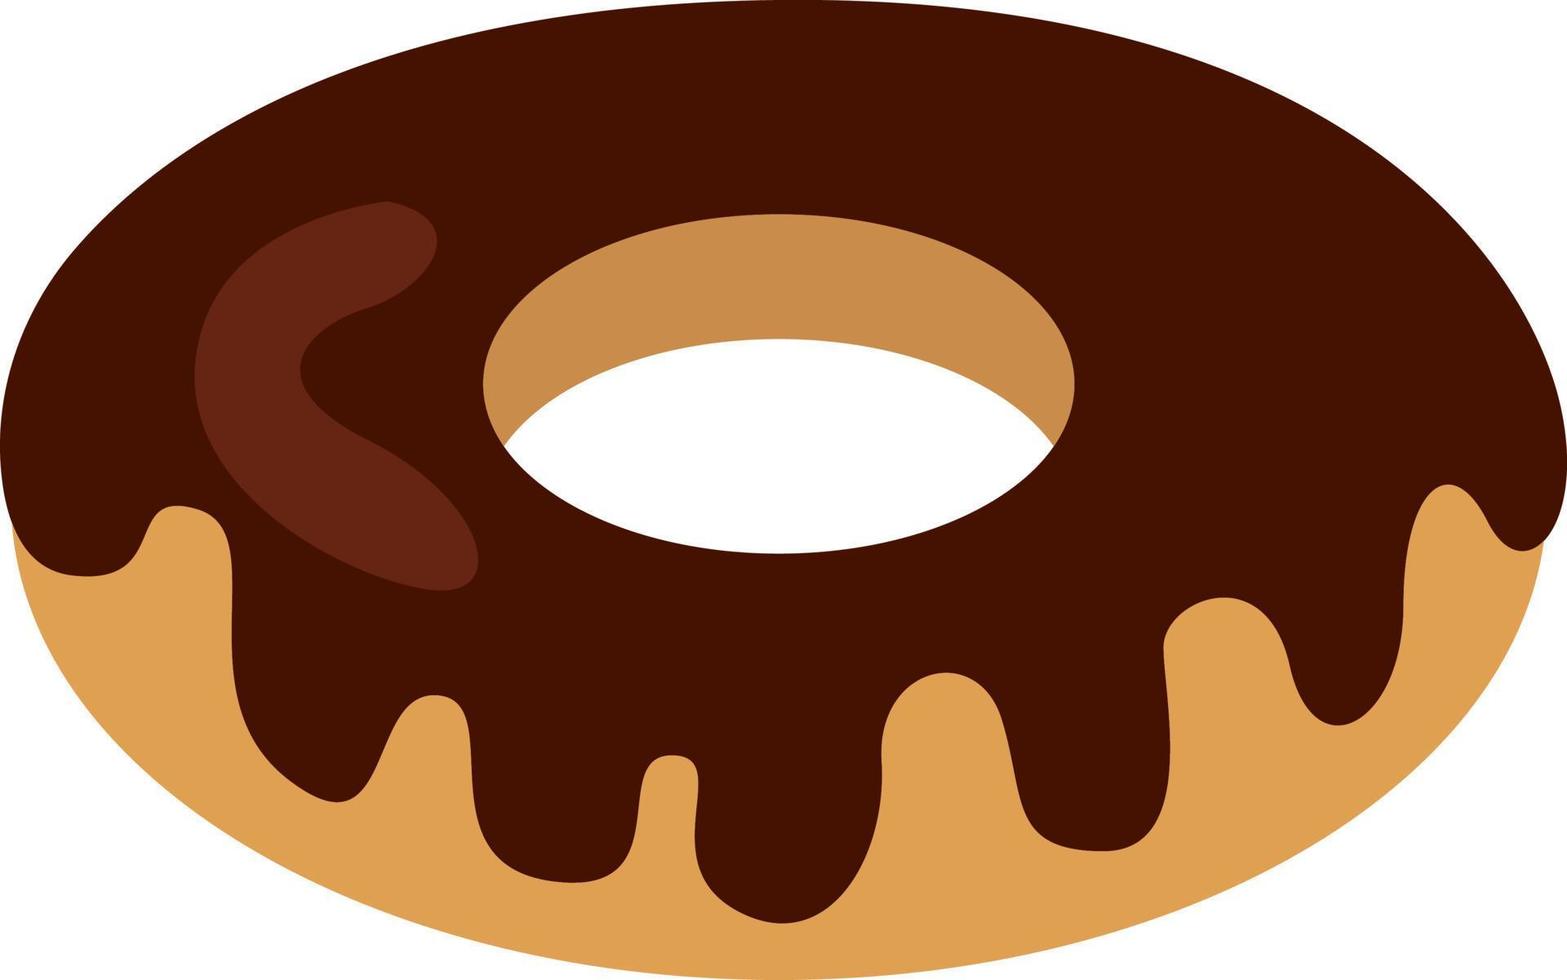 Chocolate glazed donut, illustration, vector on a white background.